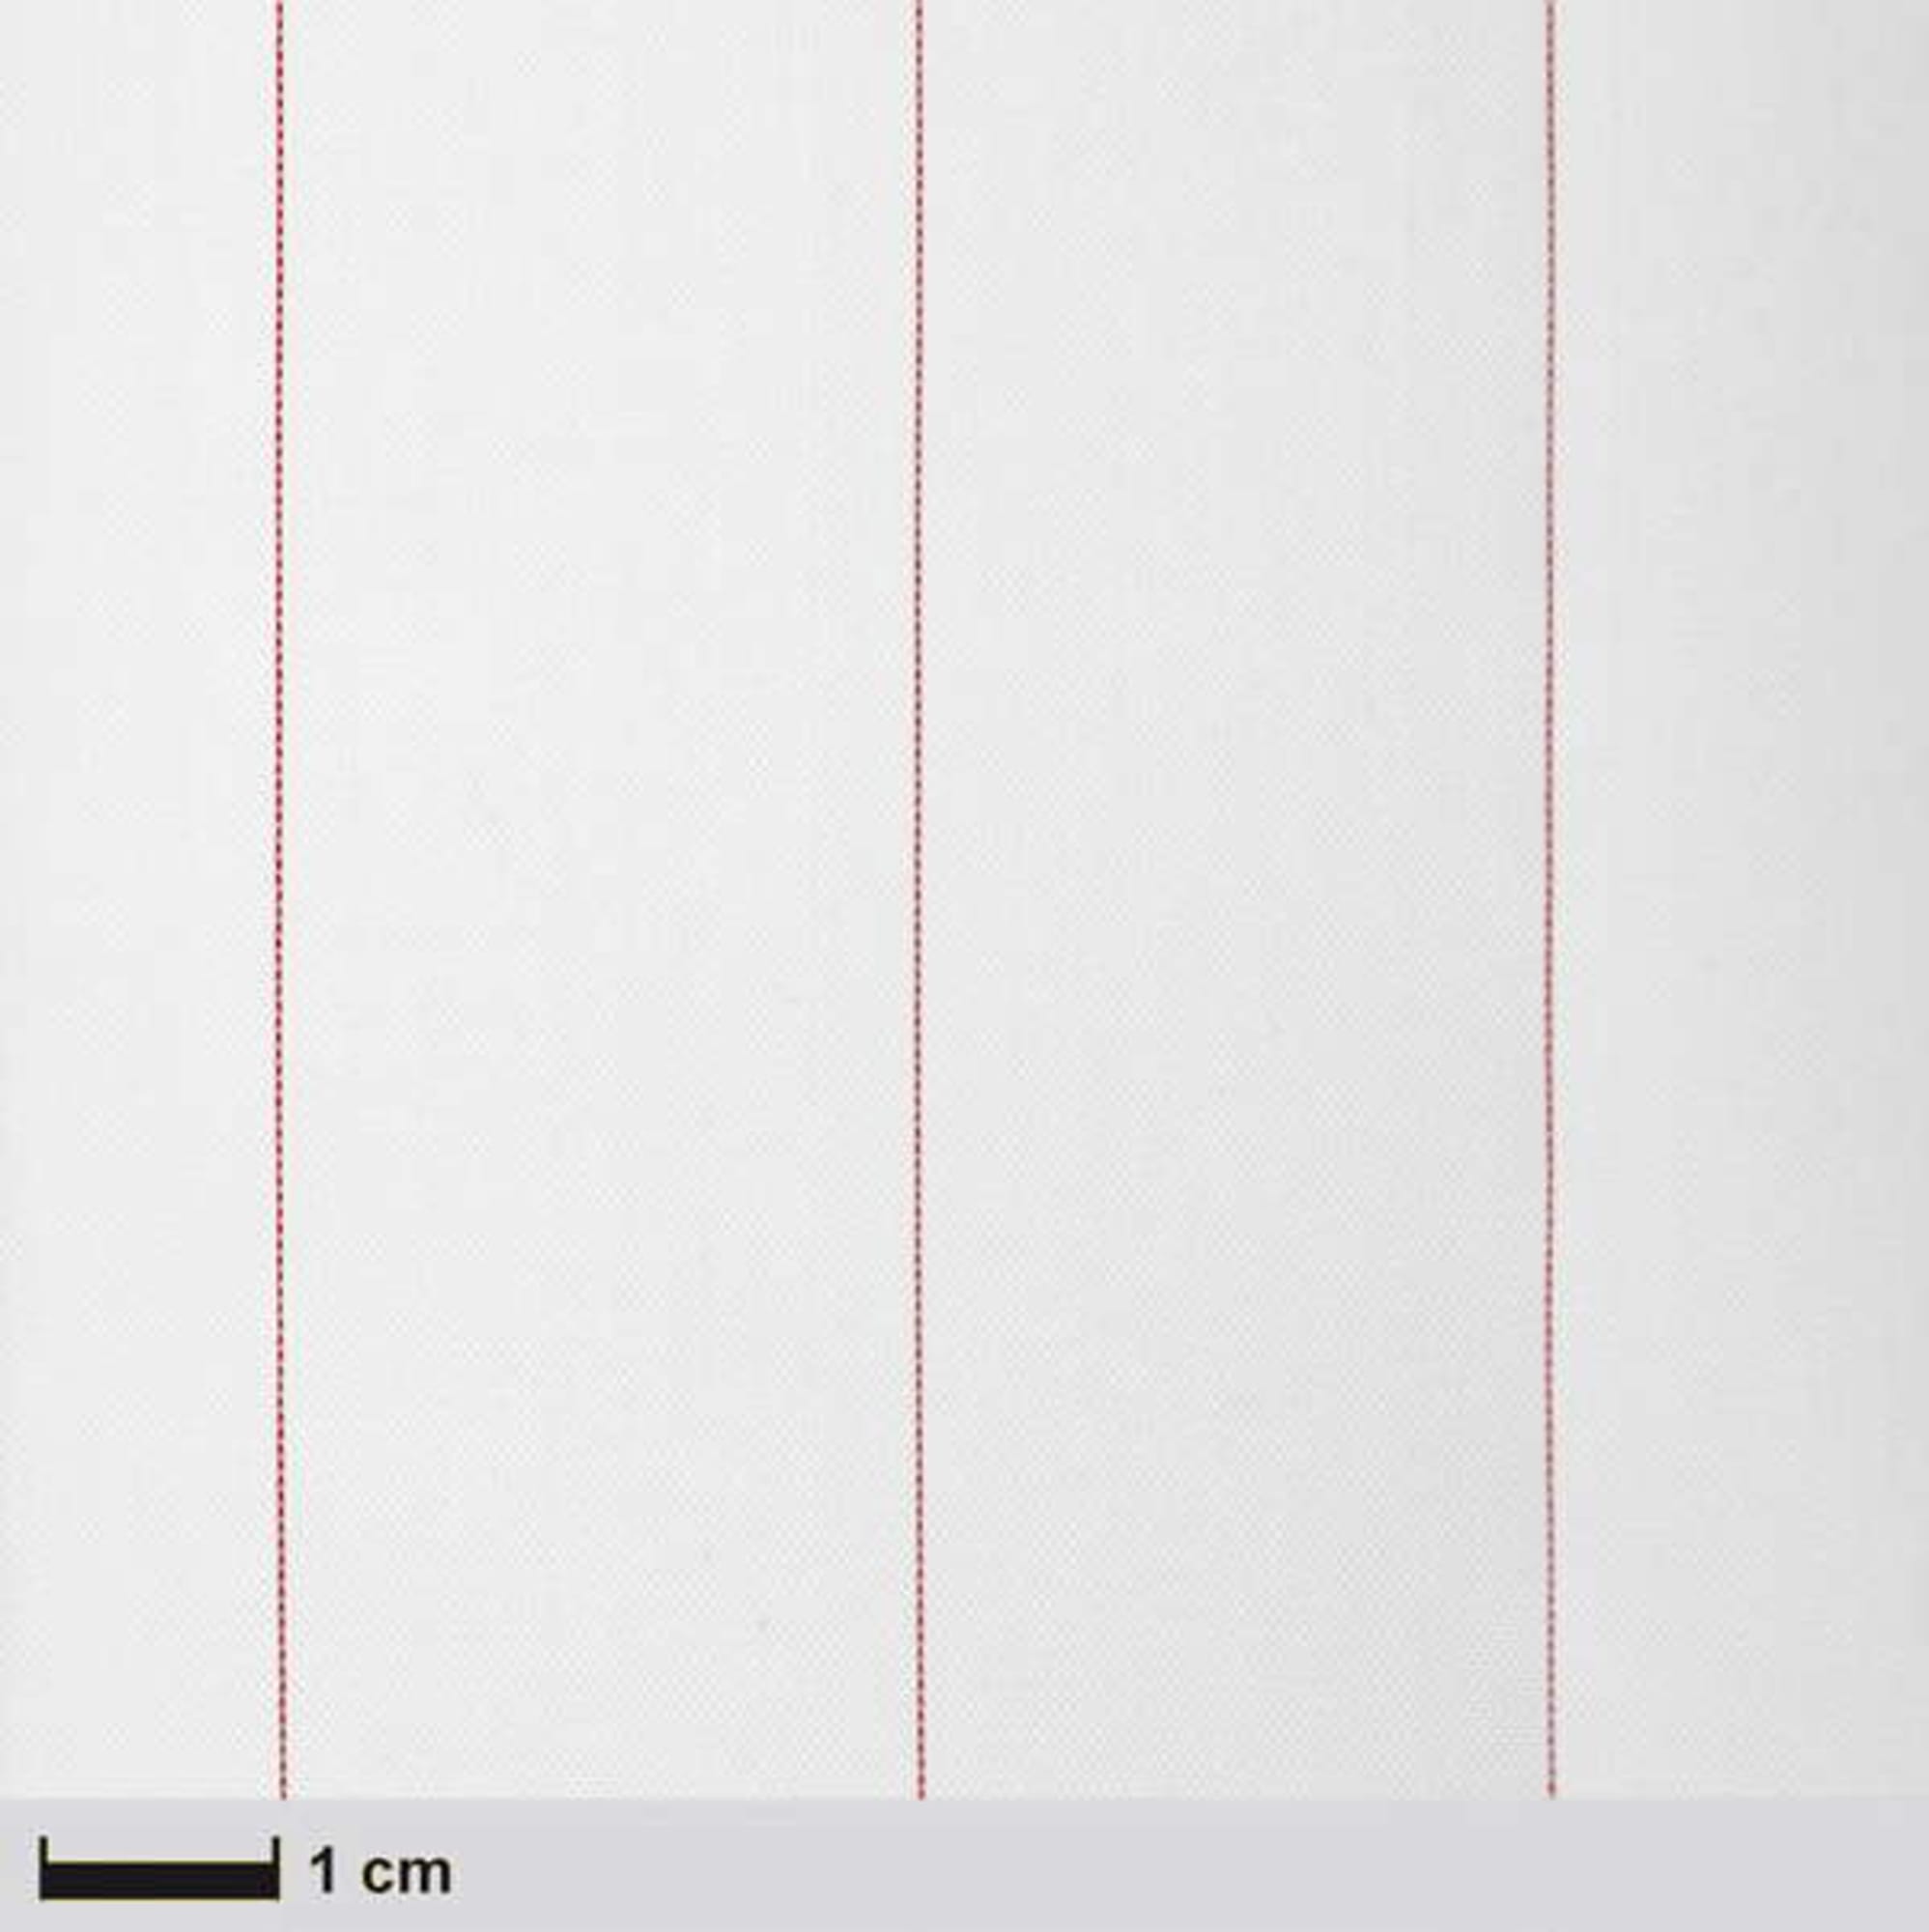 Peel ply 64 g/m² (plain weave) 150 cm 